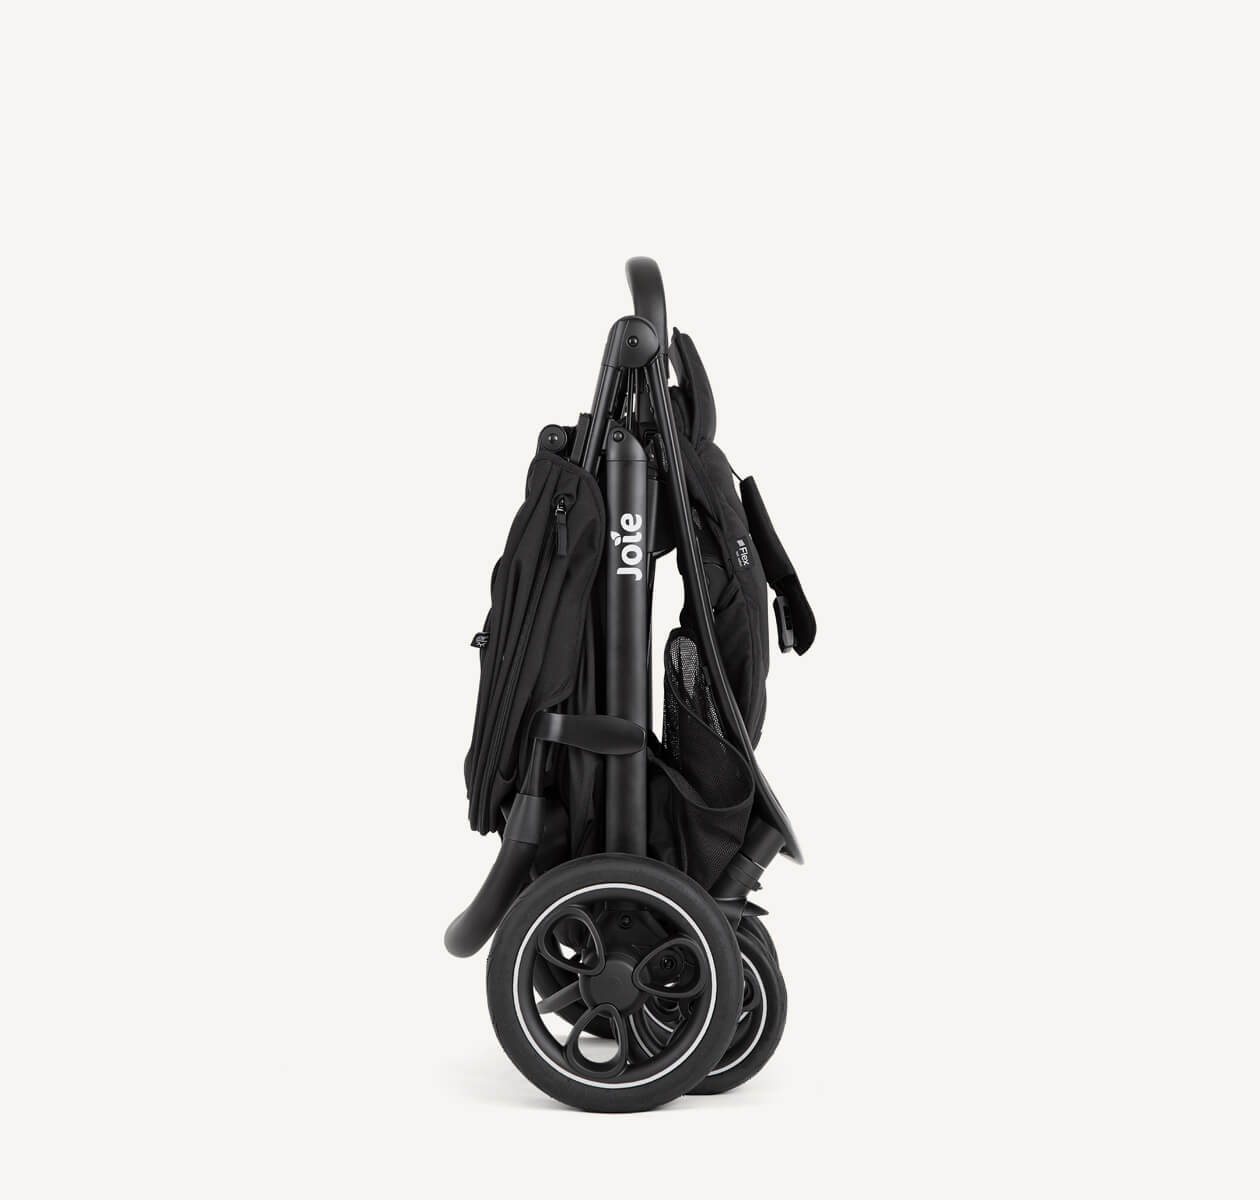 Joie Litetrax 4 Pro Stroller